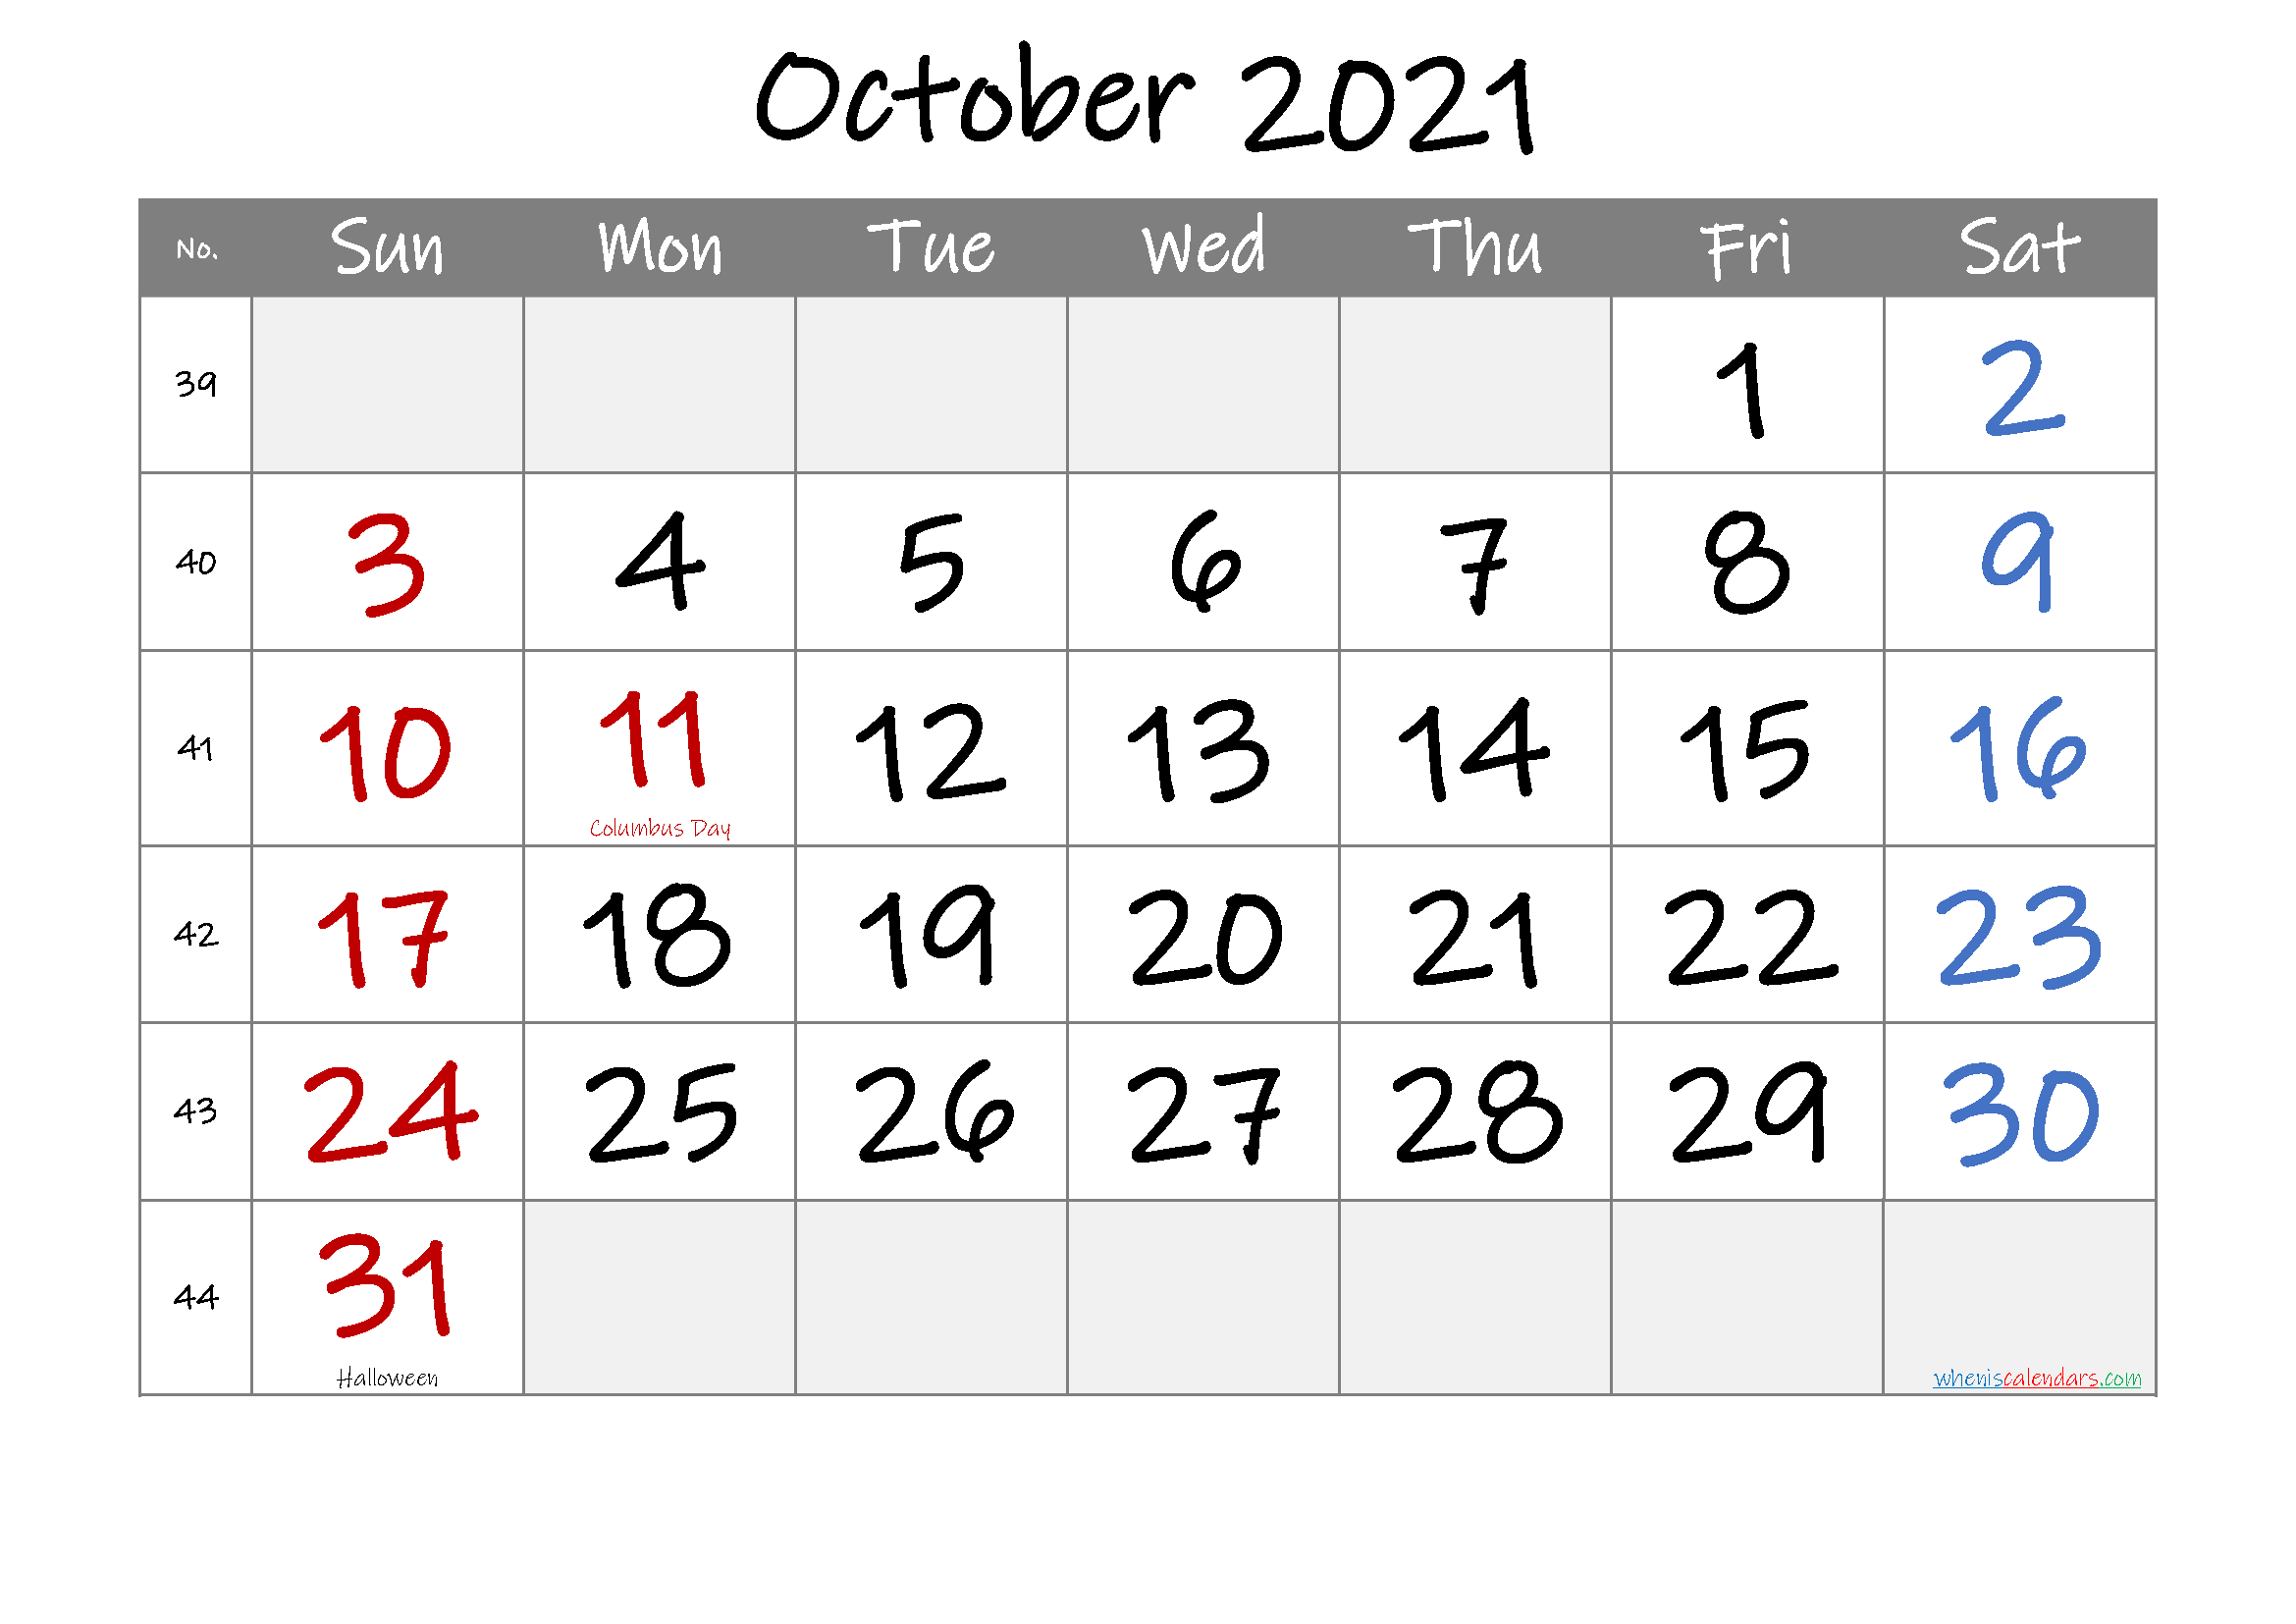 Free Printable October 2021 Calendar